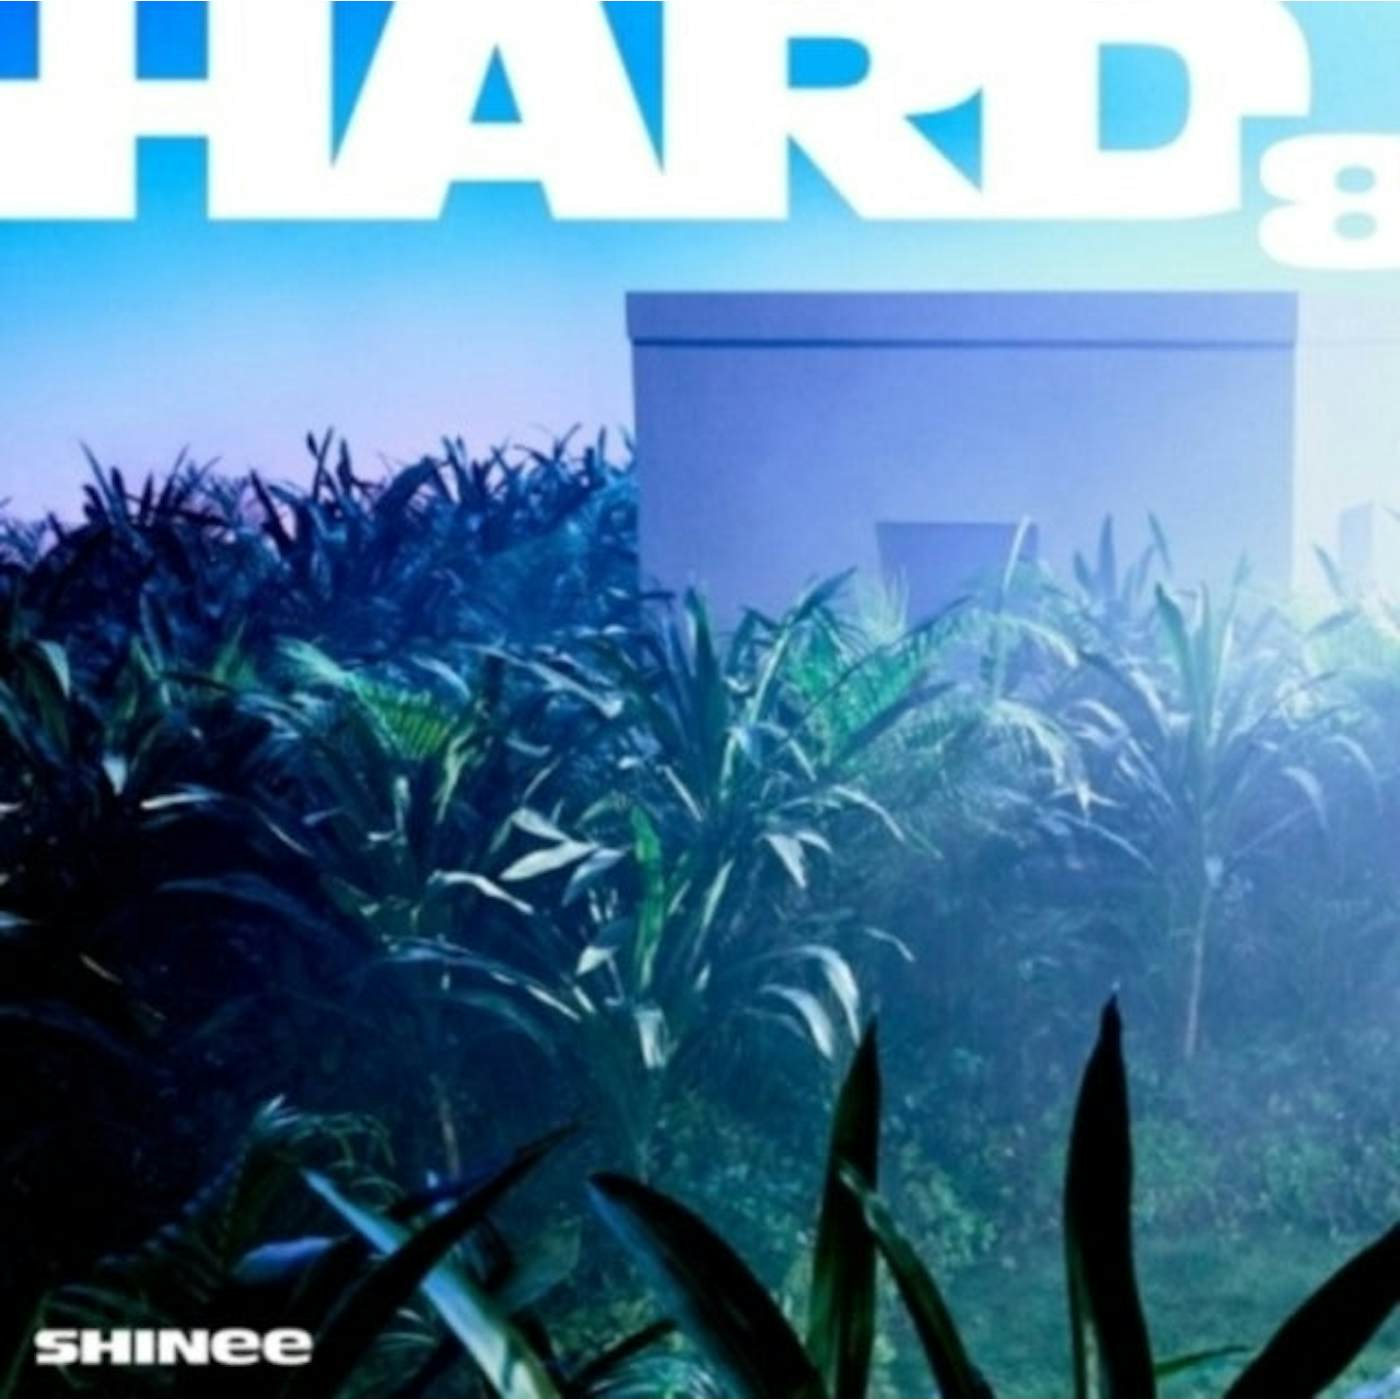 Shinee CD - Vol. 8 [Hard] (Digipack Ver.)